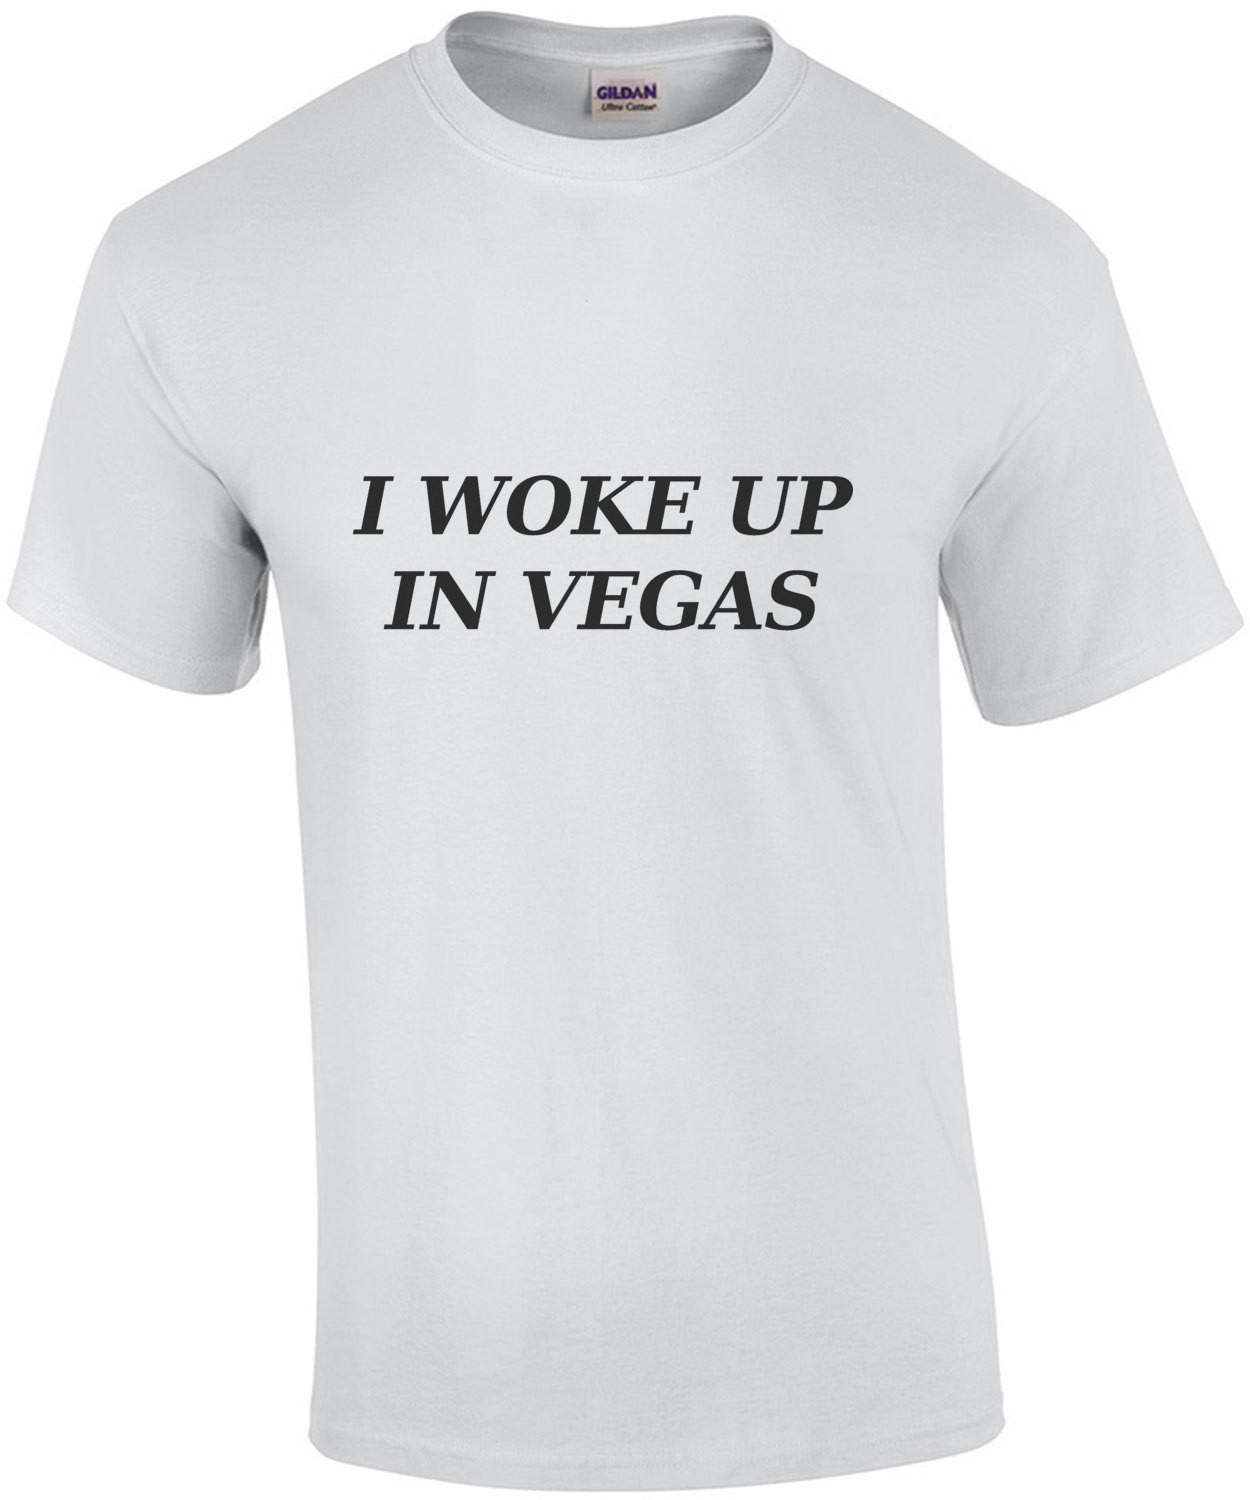 I woke up in vegas - Las Vegas - Nevada T-Shirt